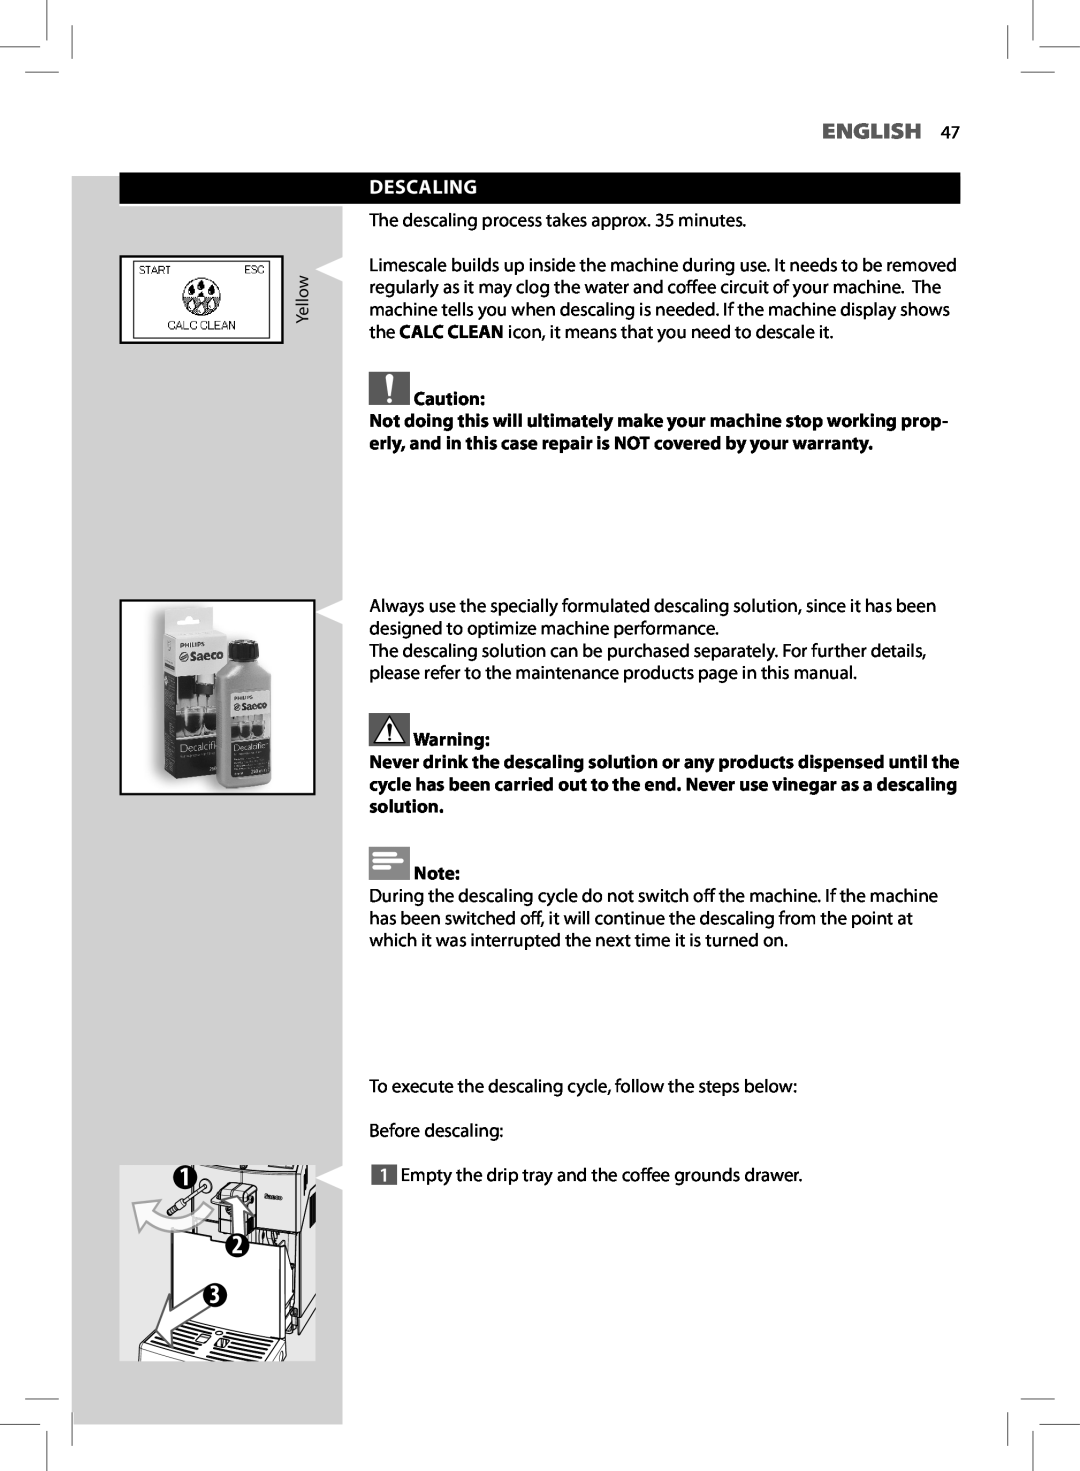 Saeco Coffee Makers HD8772 user manual English, Descaling 